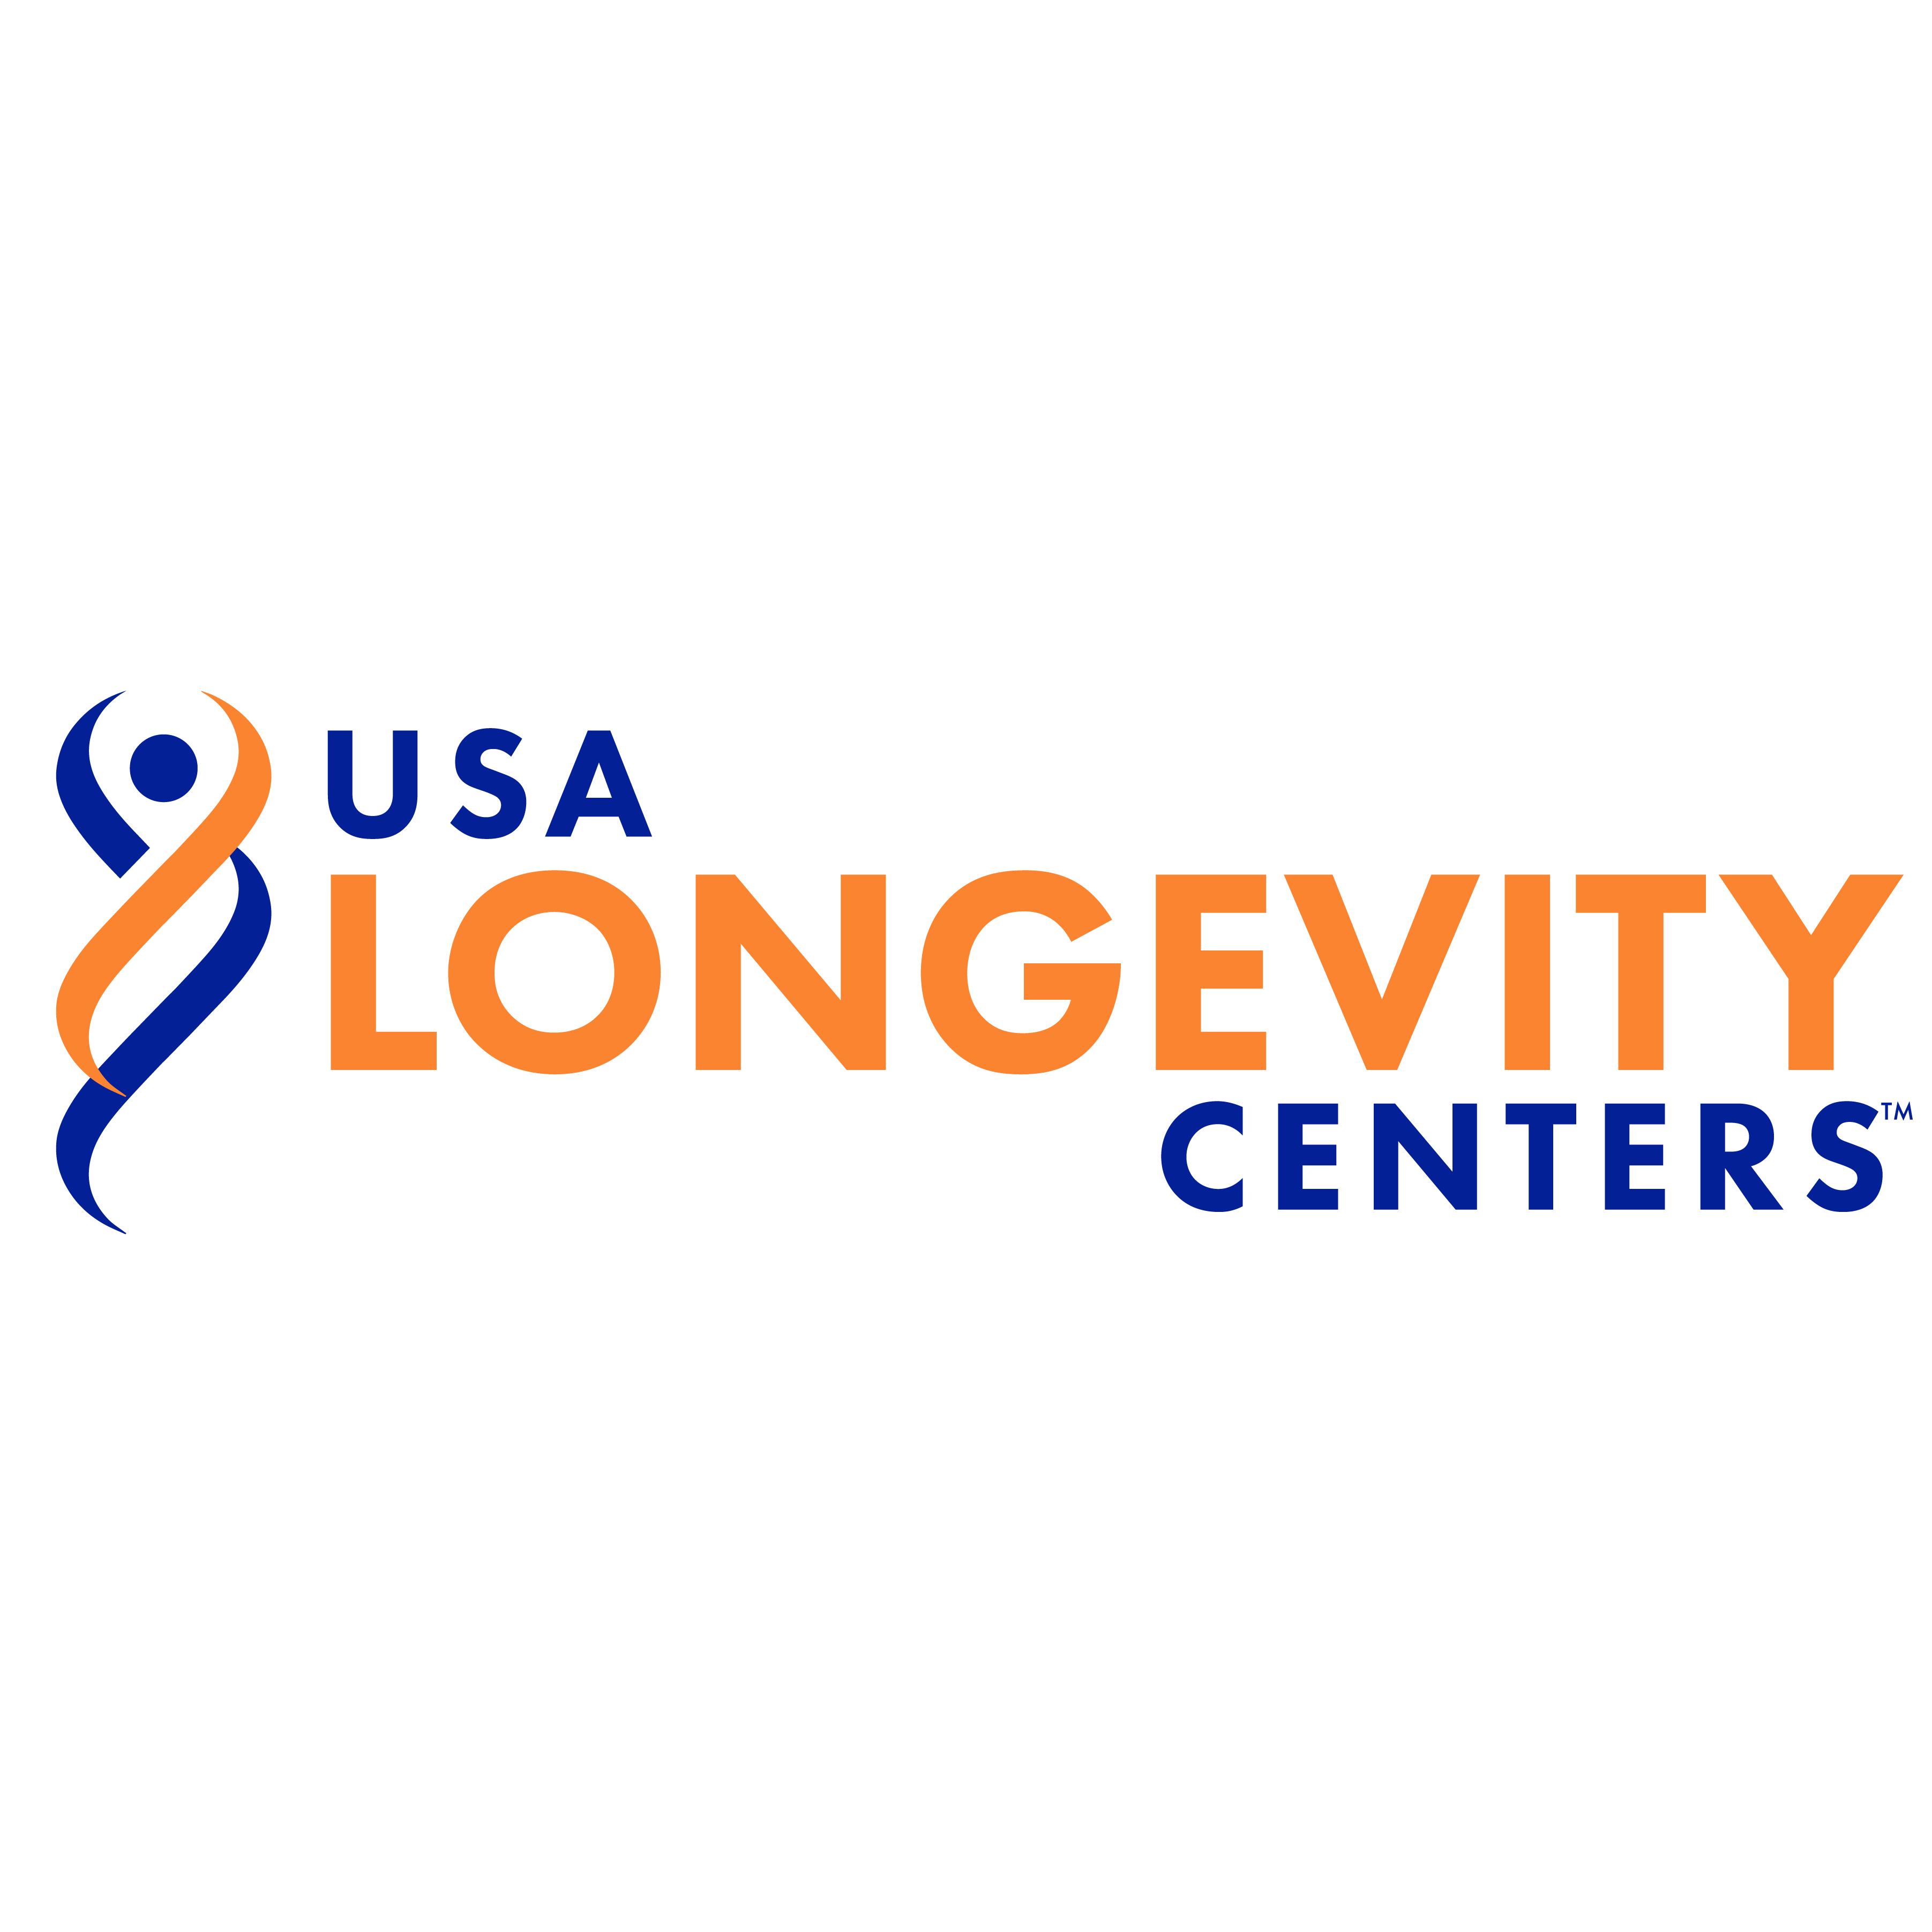 USA Longevity Centers - Mundelein, IL 60060 - (847)796-3155 | ShowMeLocal.com